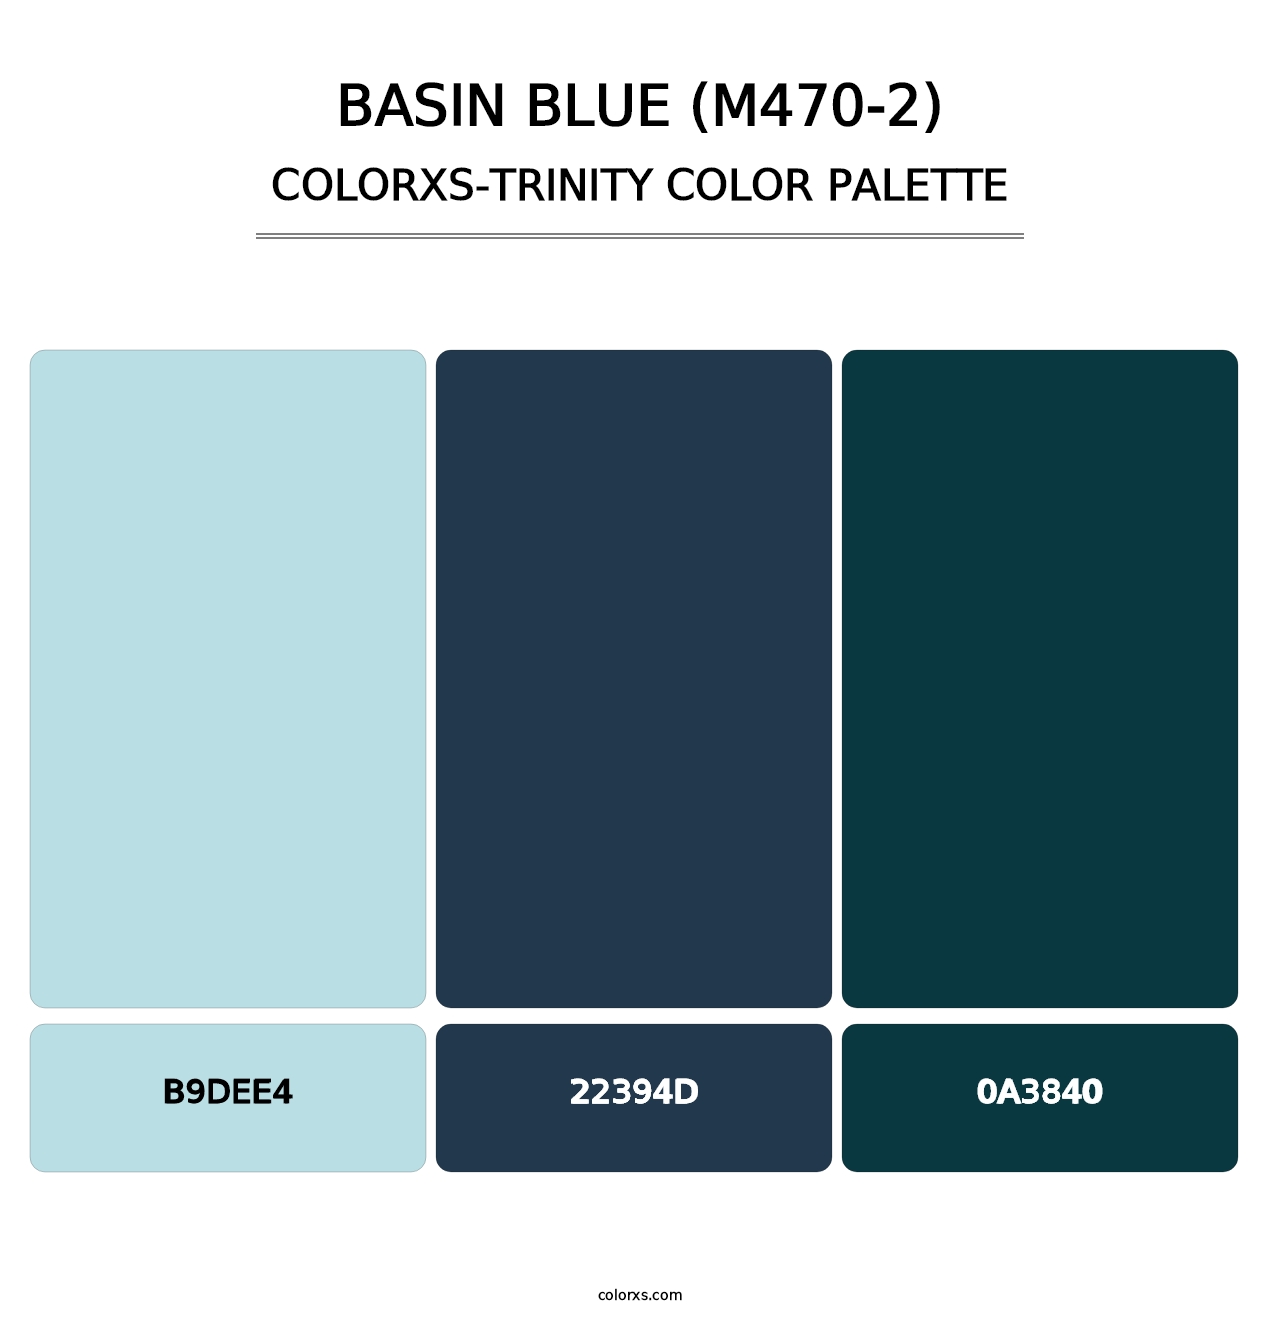 Basin Blue (M470-2) - Colorxs Trinity Palette